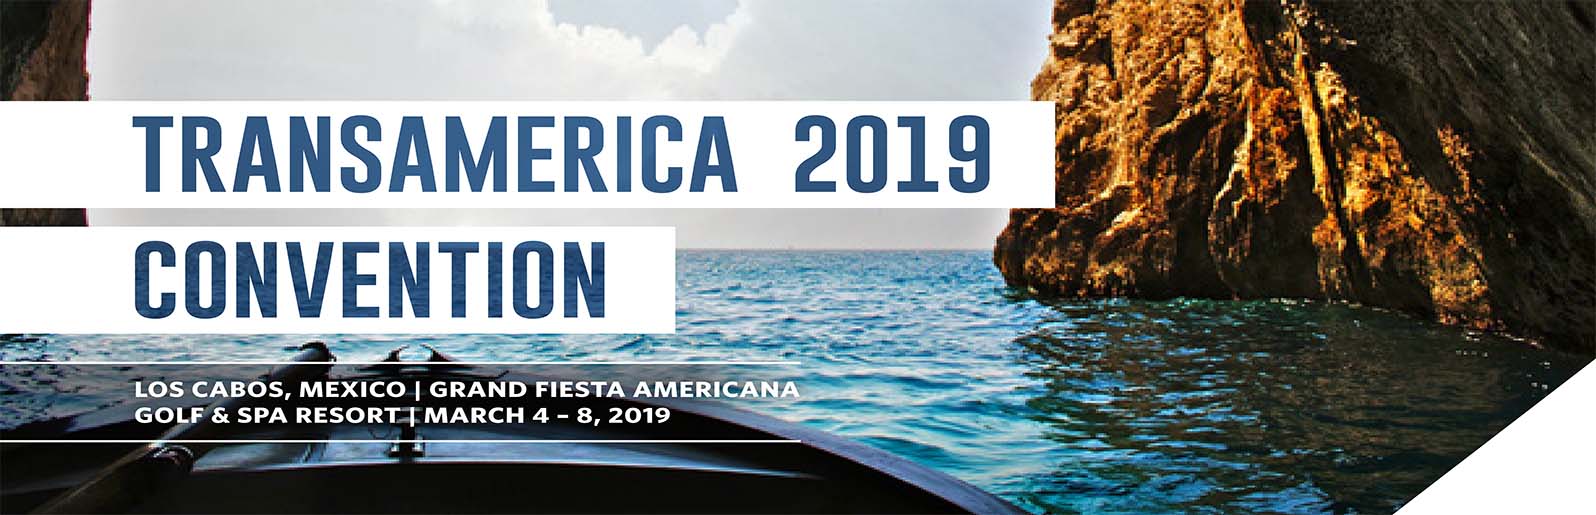 Transamerica 2019 Convention